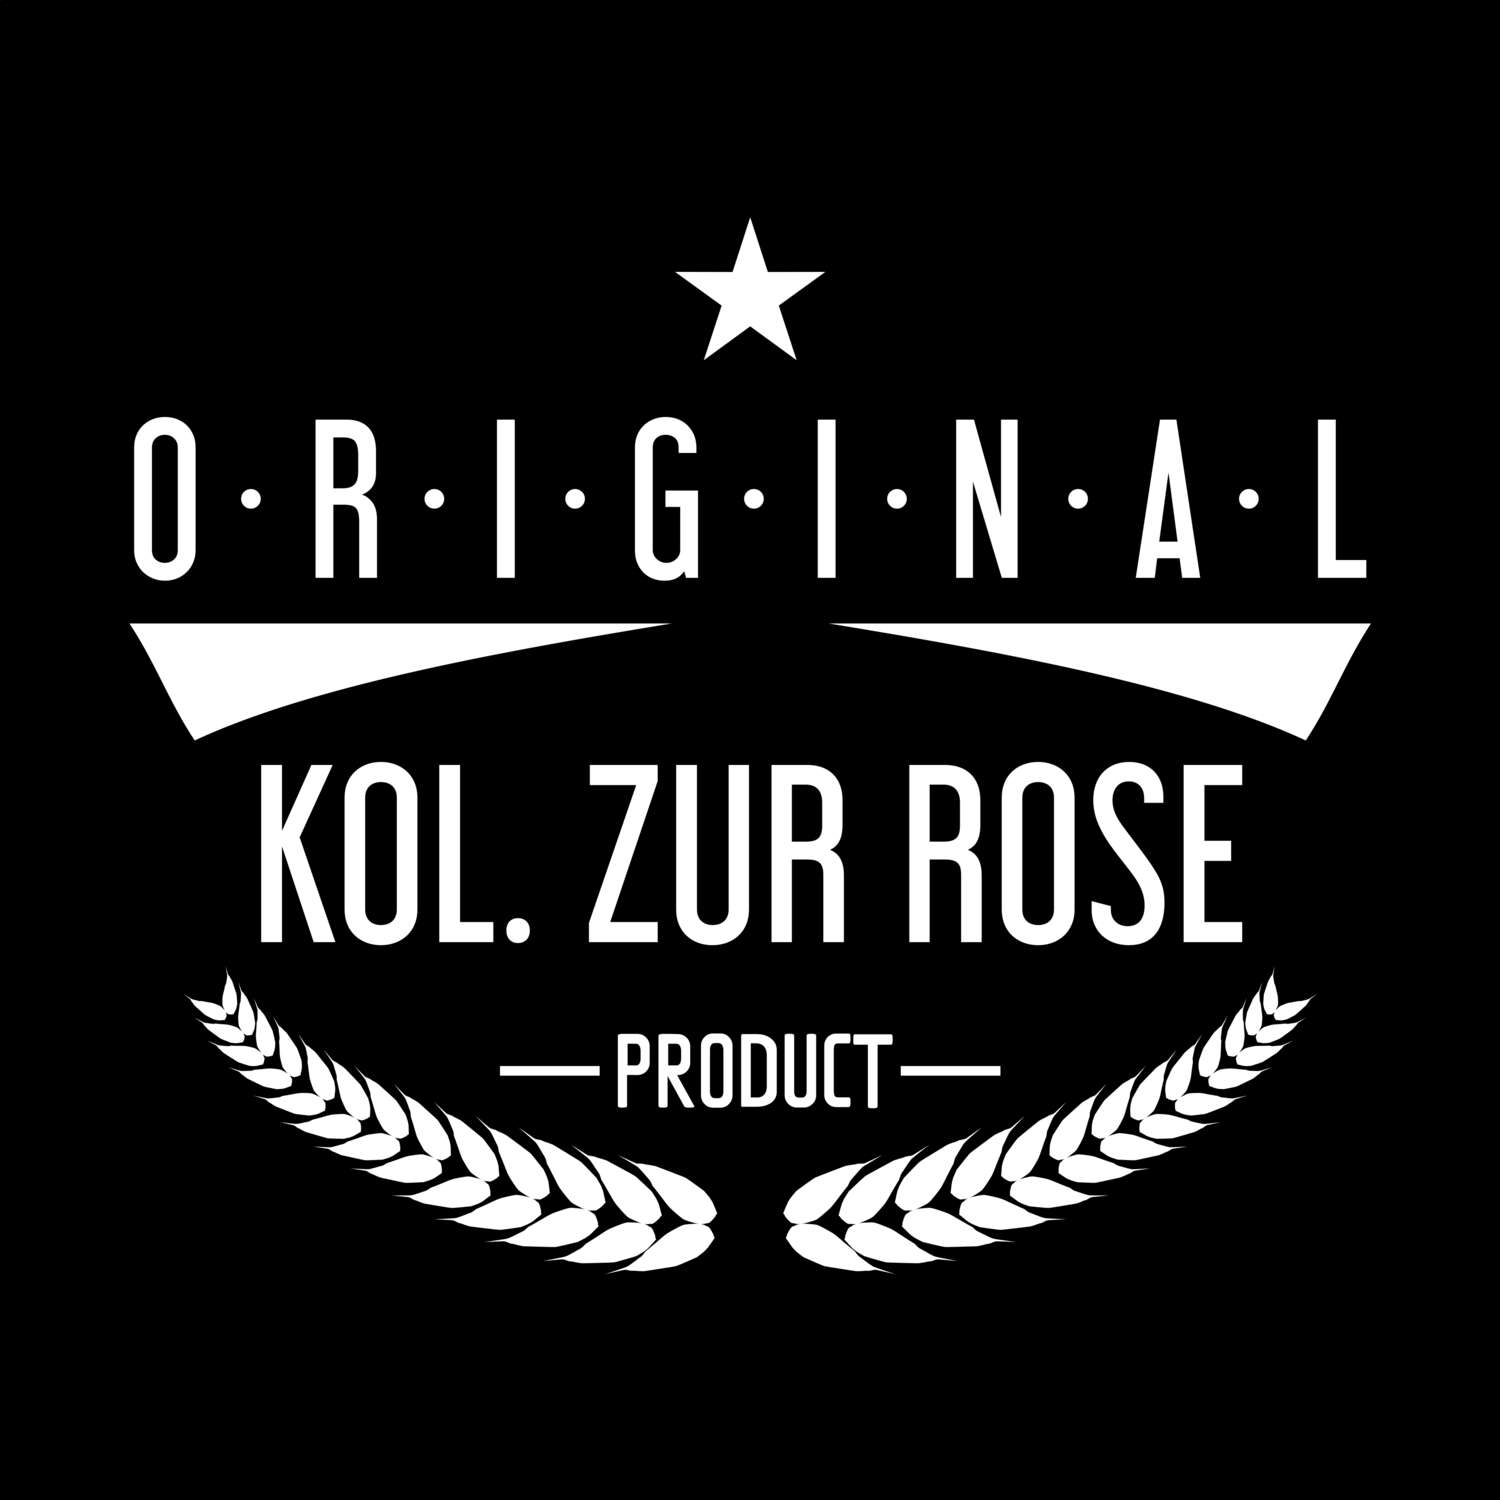 Kol. Zur Rose T-Shirt »Original Product«